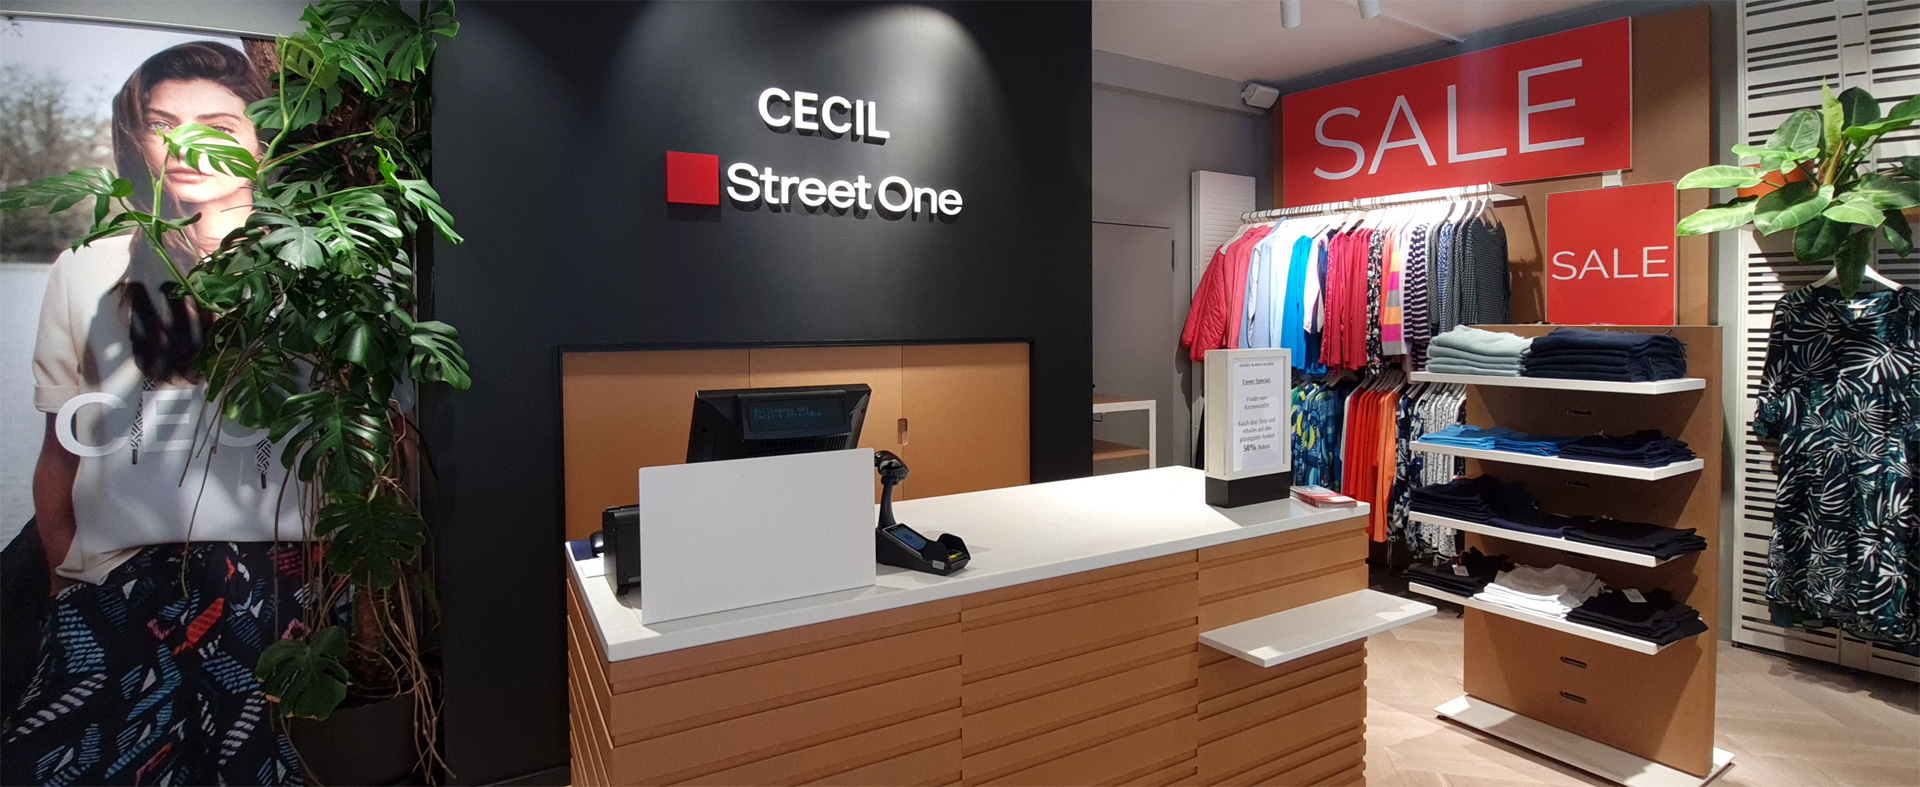 Street One – Cecil Store Mühlhausen